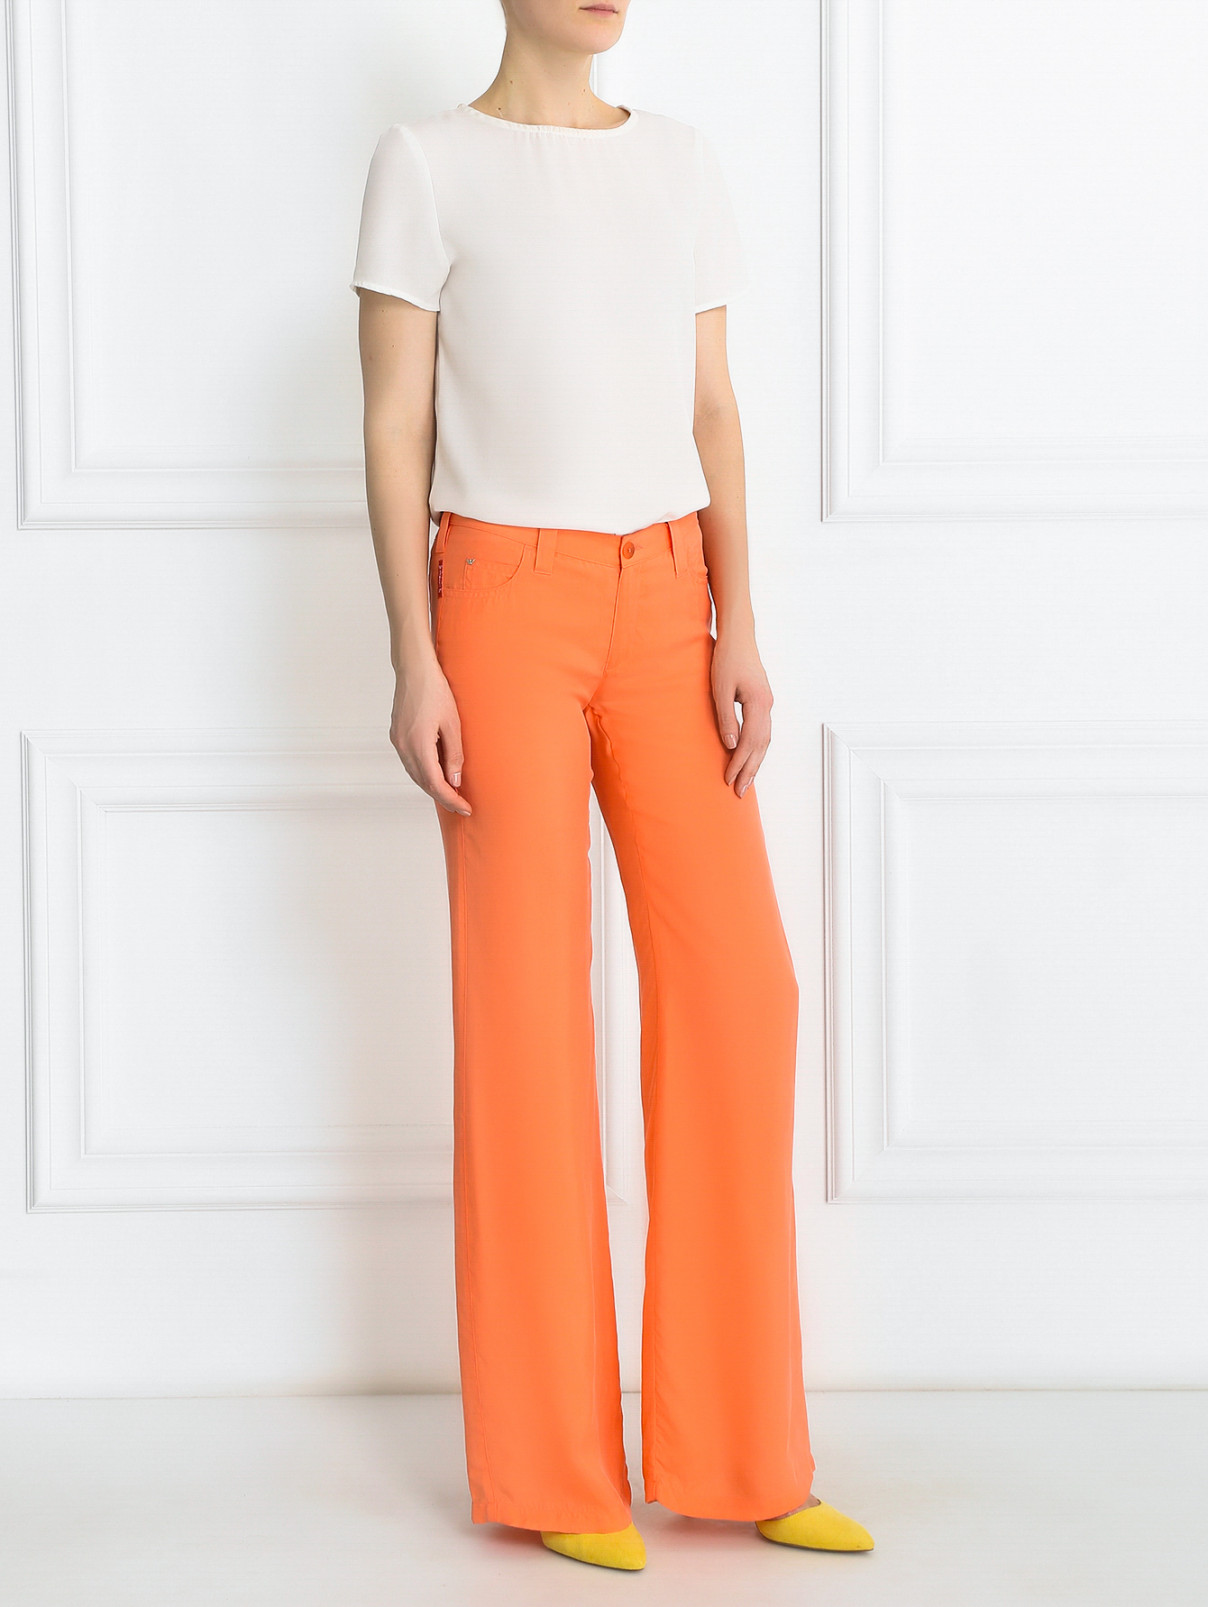 Брюки свободного кроя Armani Jeans  –  Модель Общий вид  – Цвет:  Оранжевый